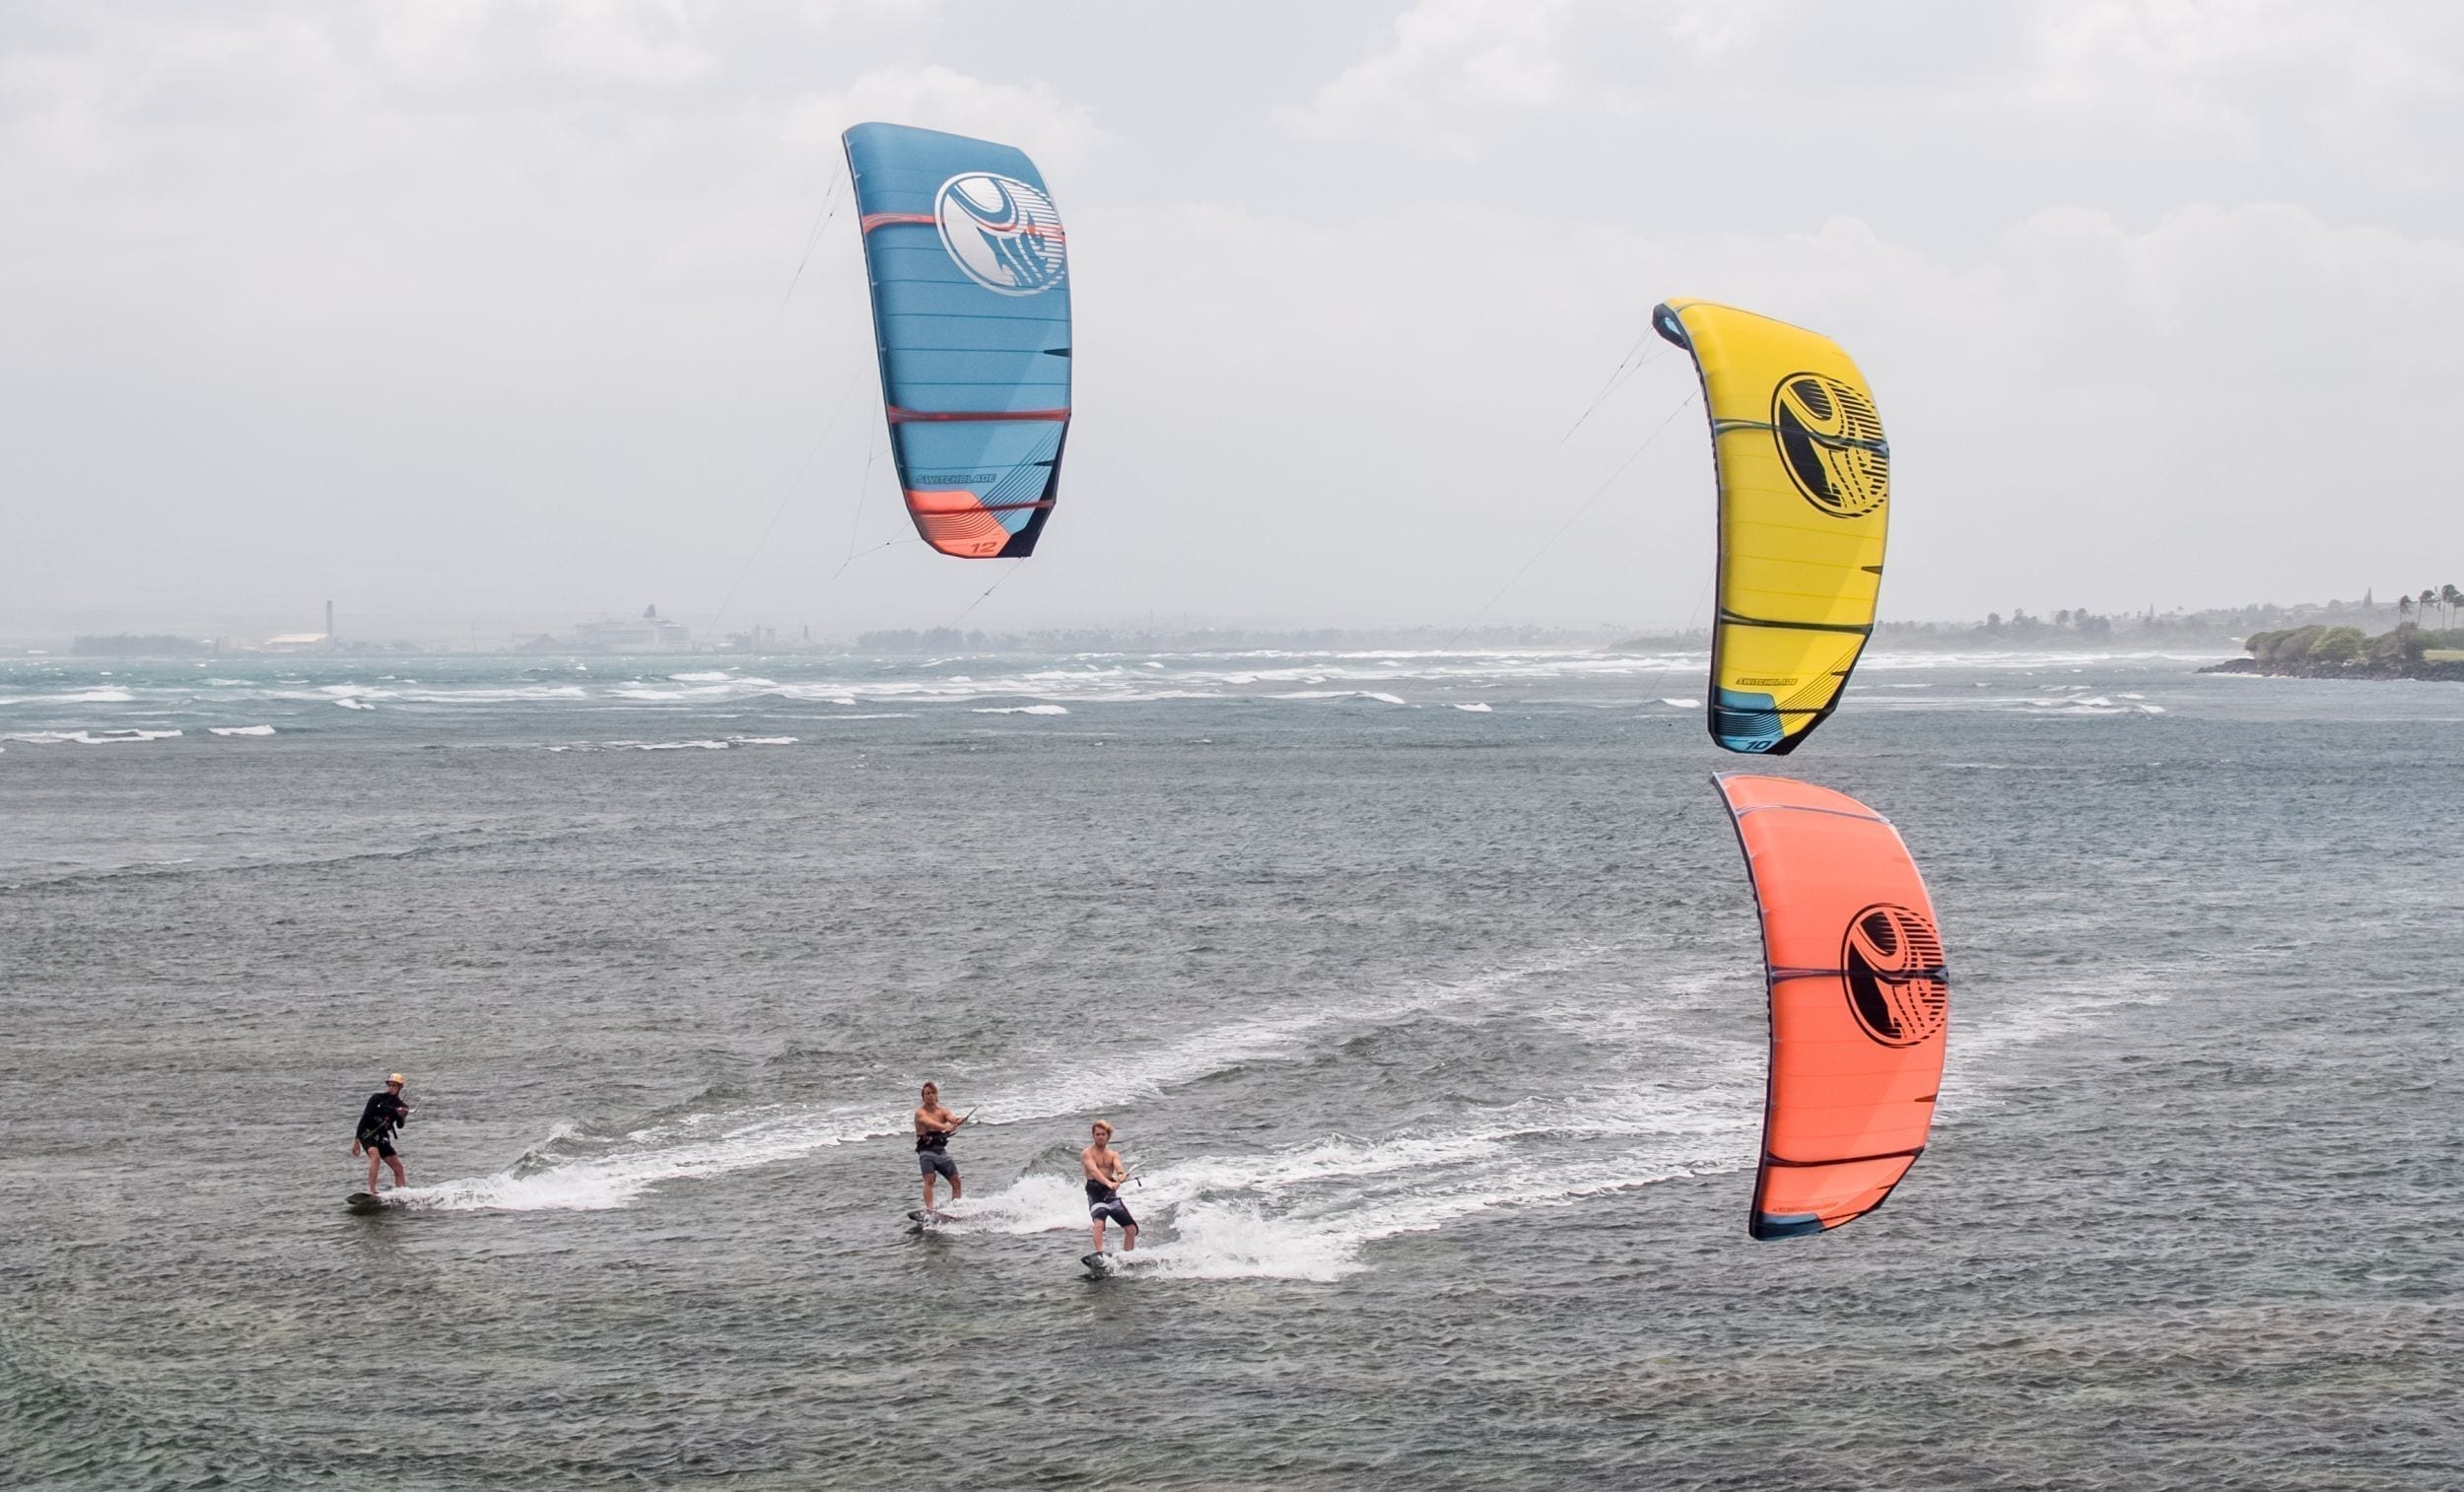 Fresh Kitesurfing Miami Beach 2020 Kite Duftbaum Cabrinha Switchblade 